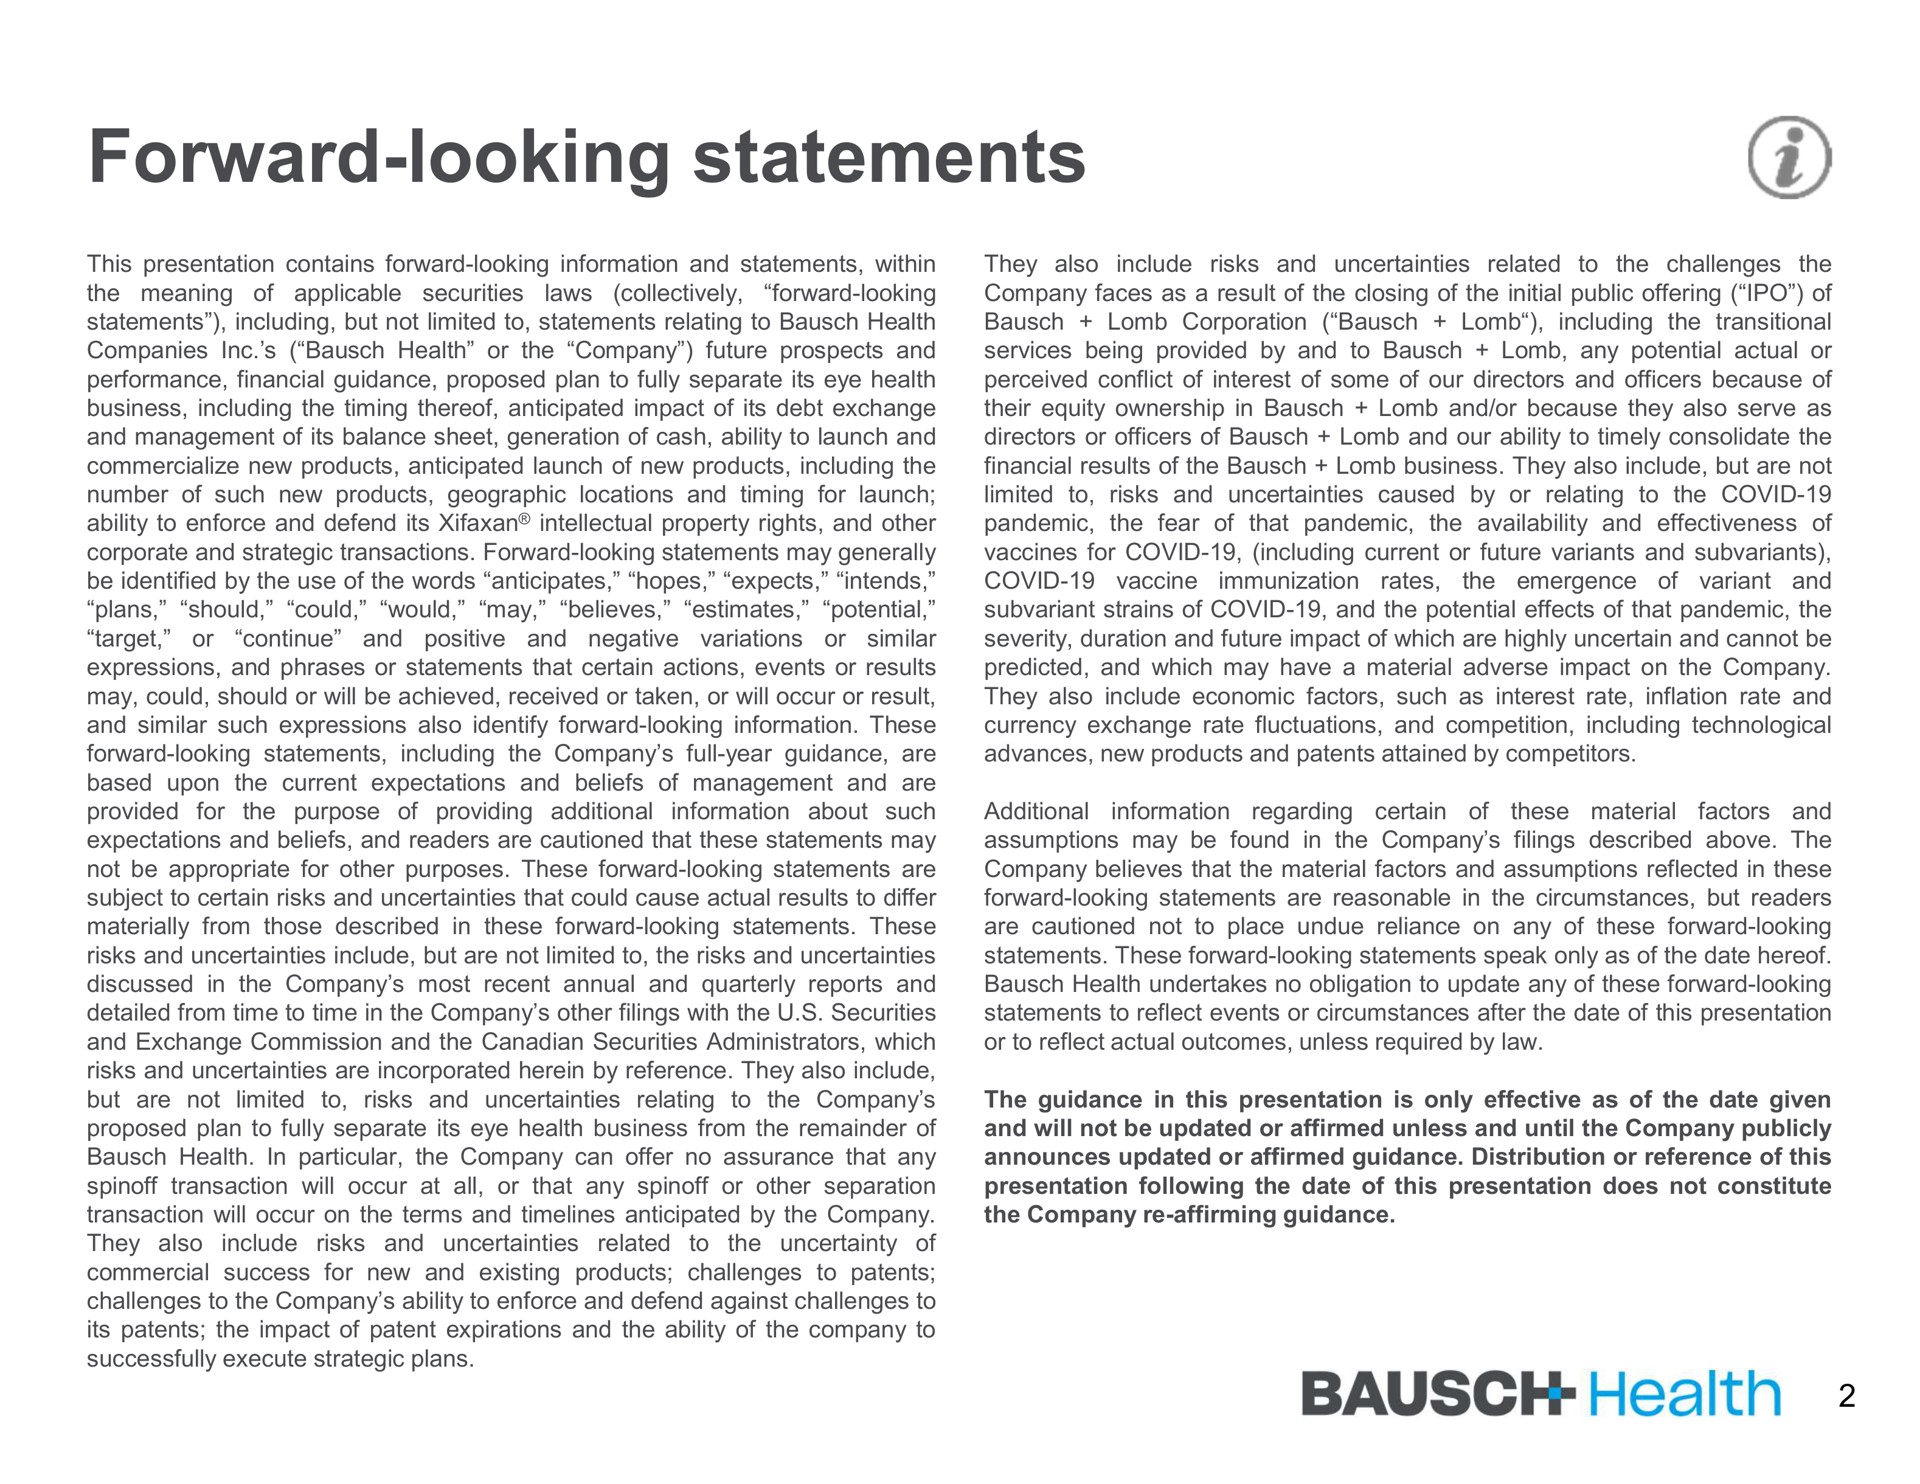 forward looking statements health | Bausch Health Companies